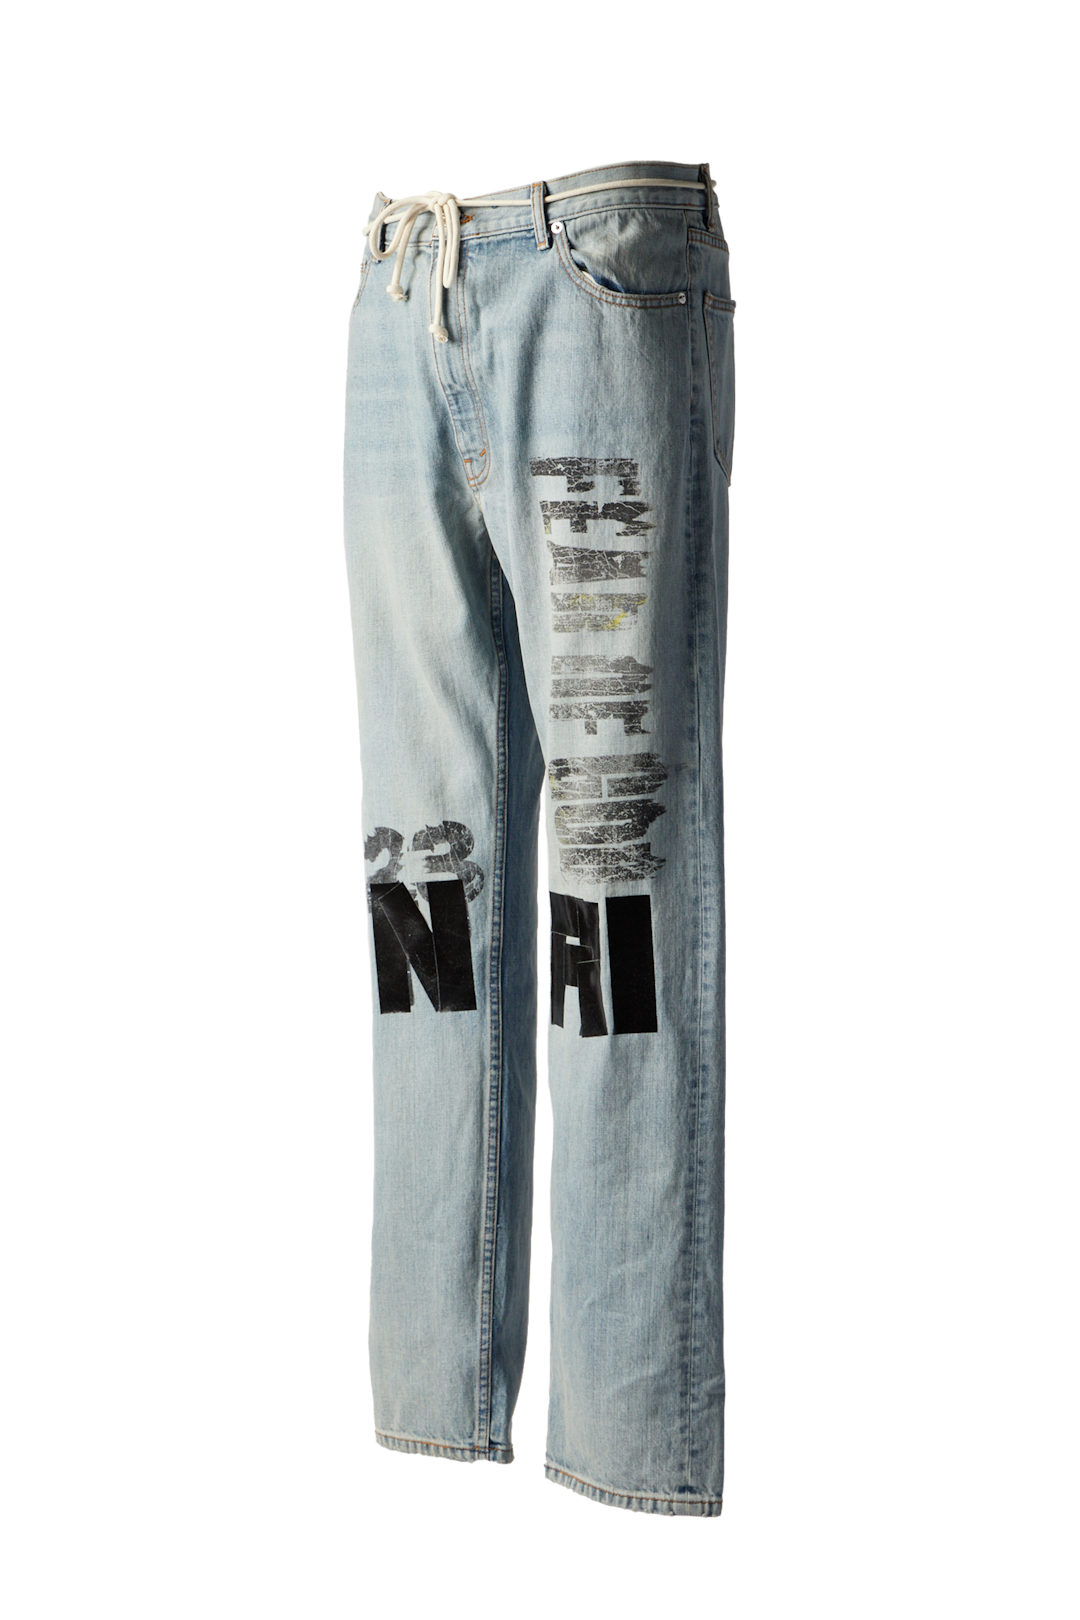 RRR123 x FEAR OF GOD - Inri He Rose Denim Jeans product image